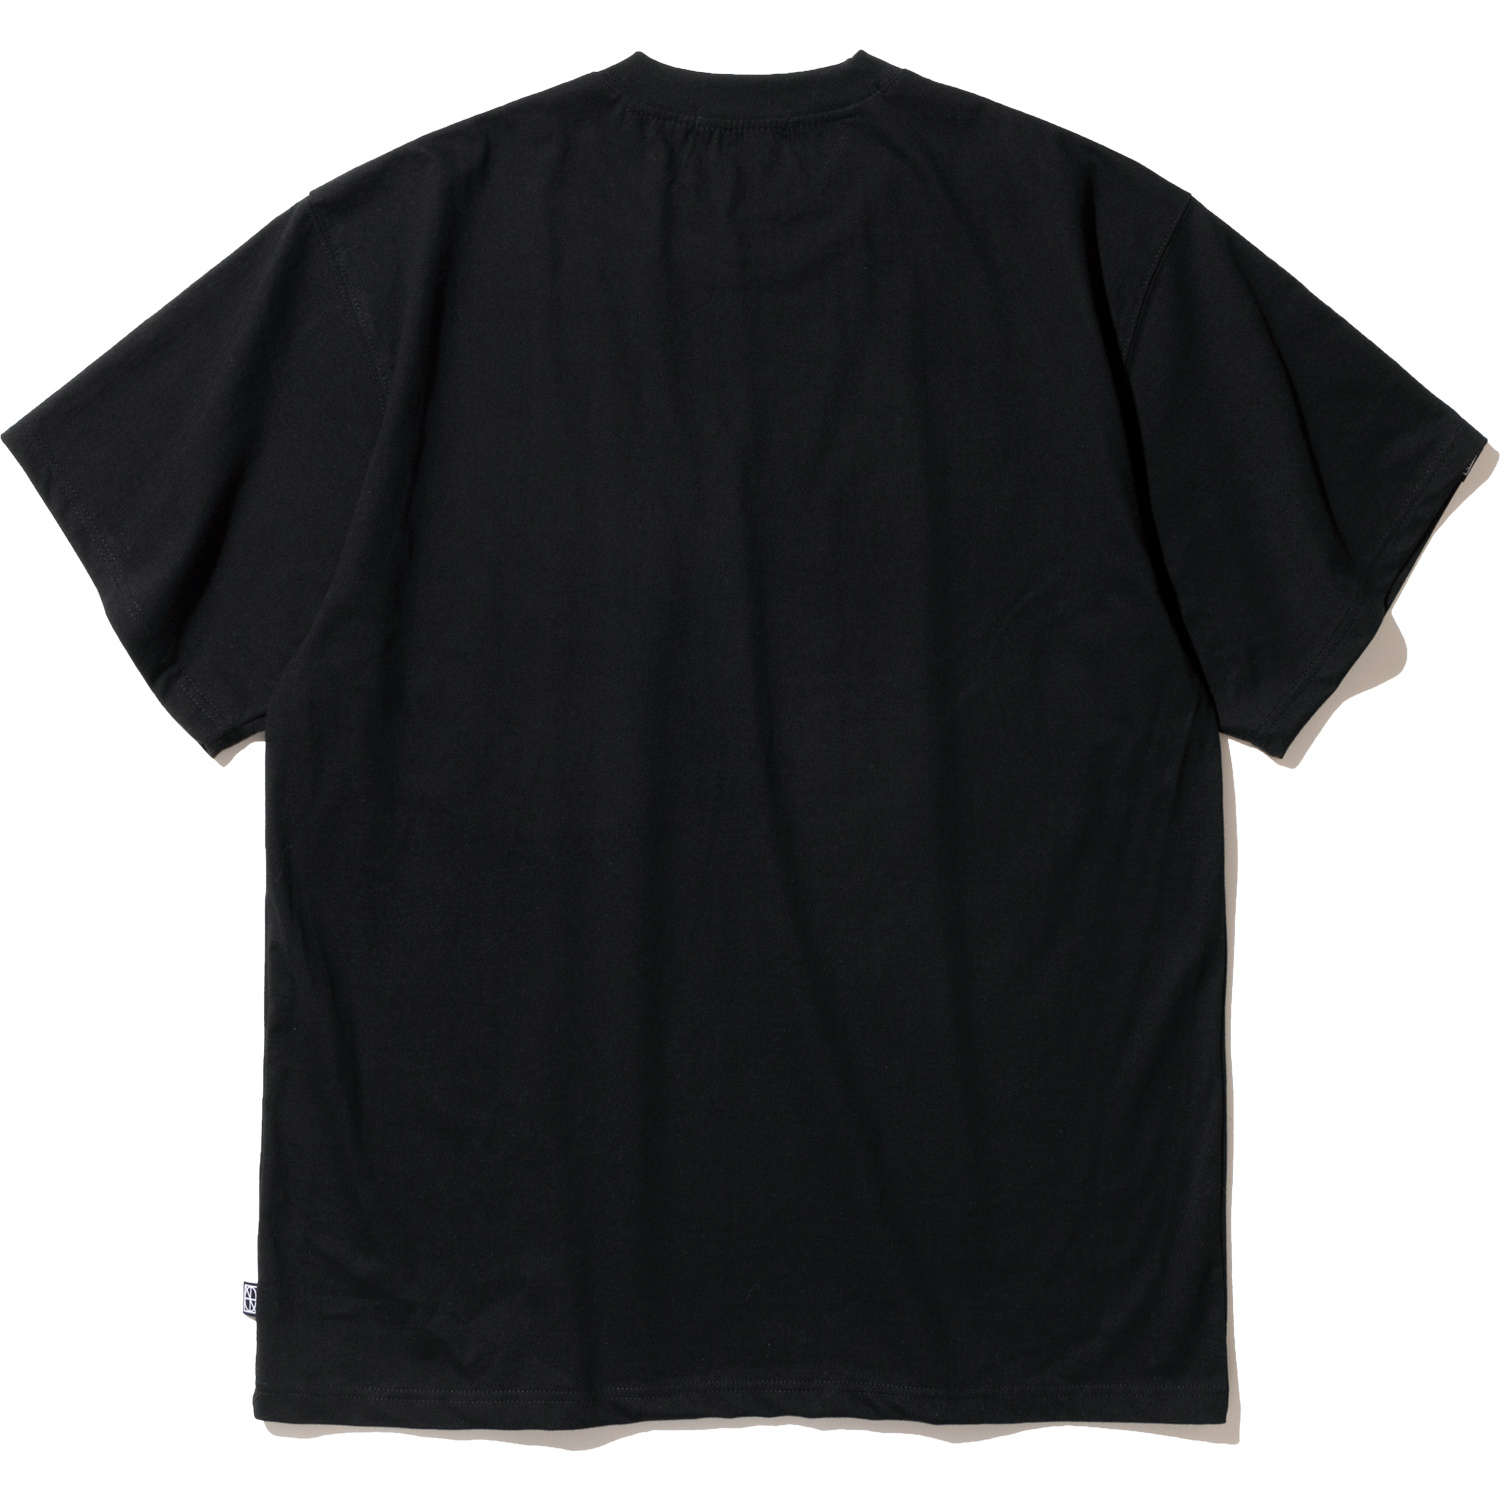 Burn up T-Shirts - Black,NOT4NERD